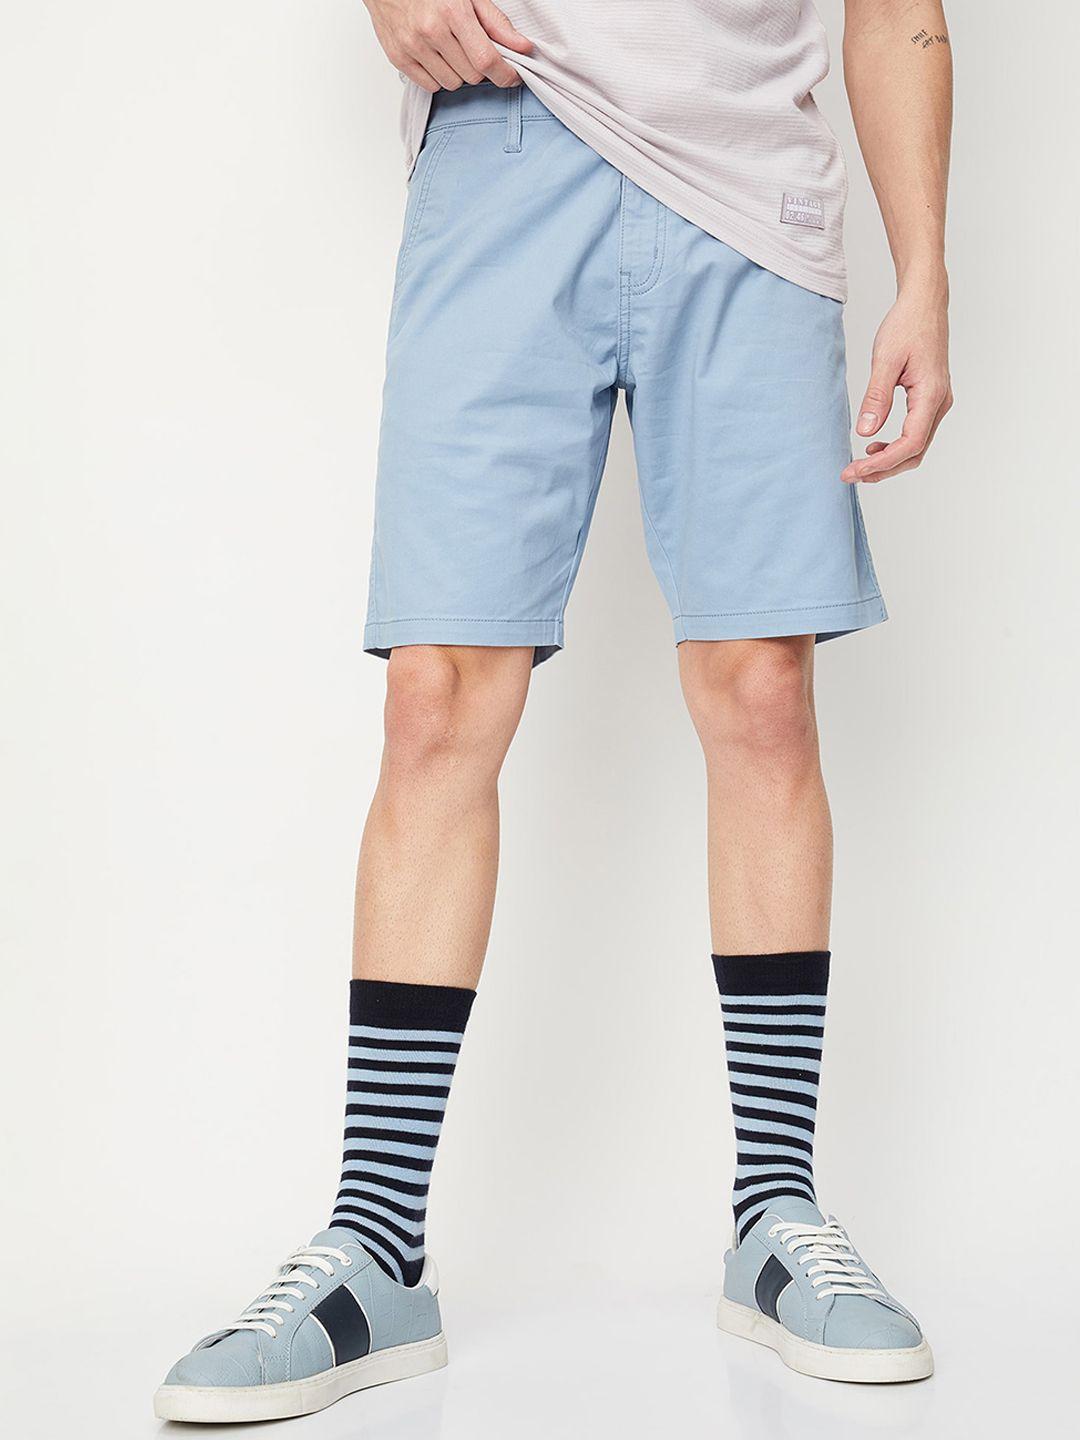 max-men-cotton-shorts